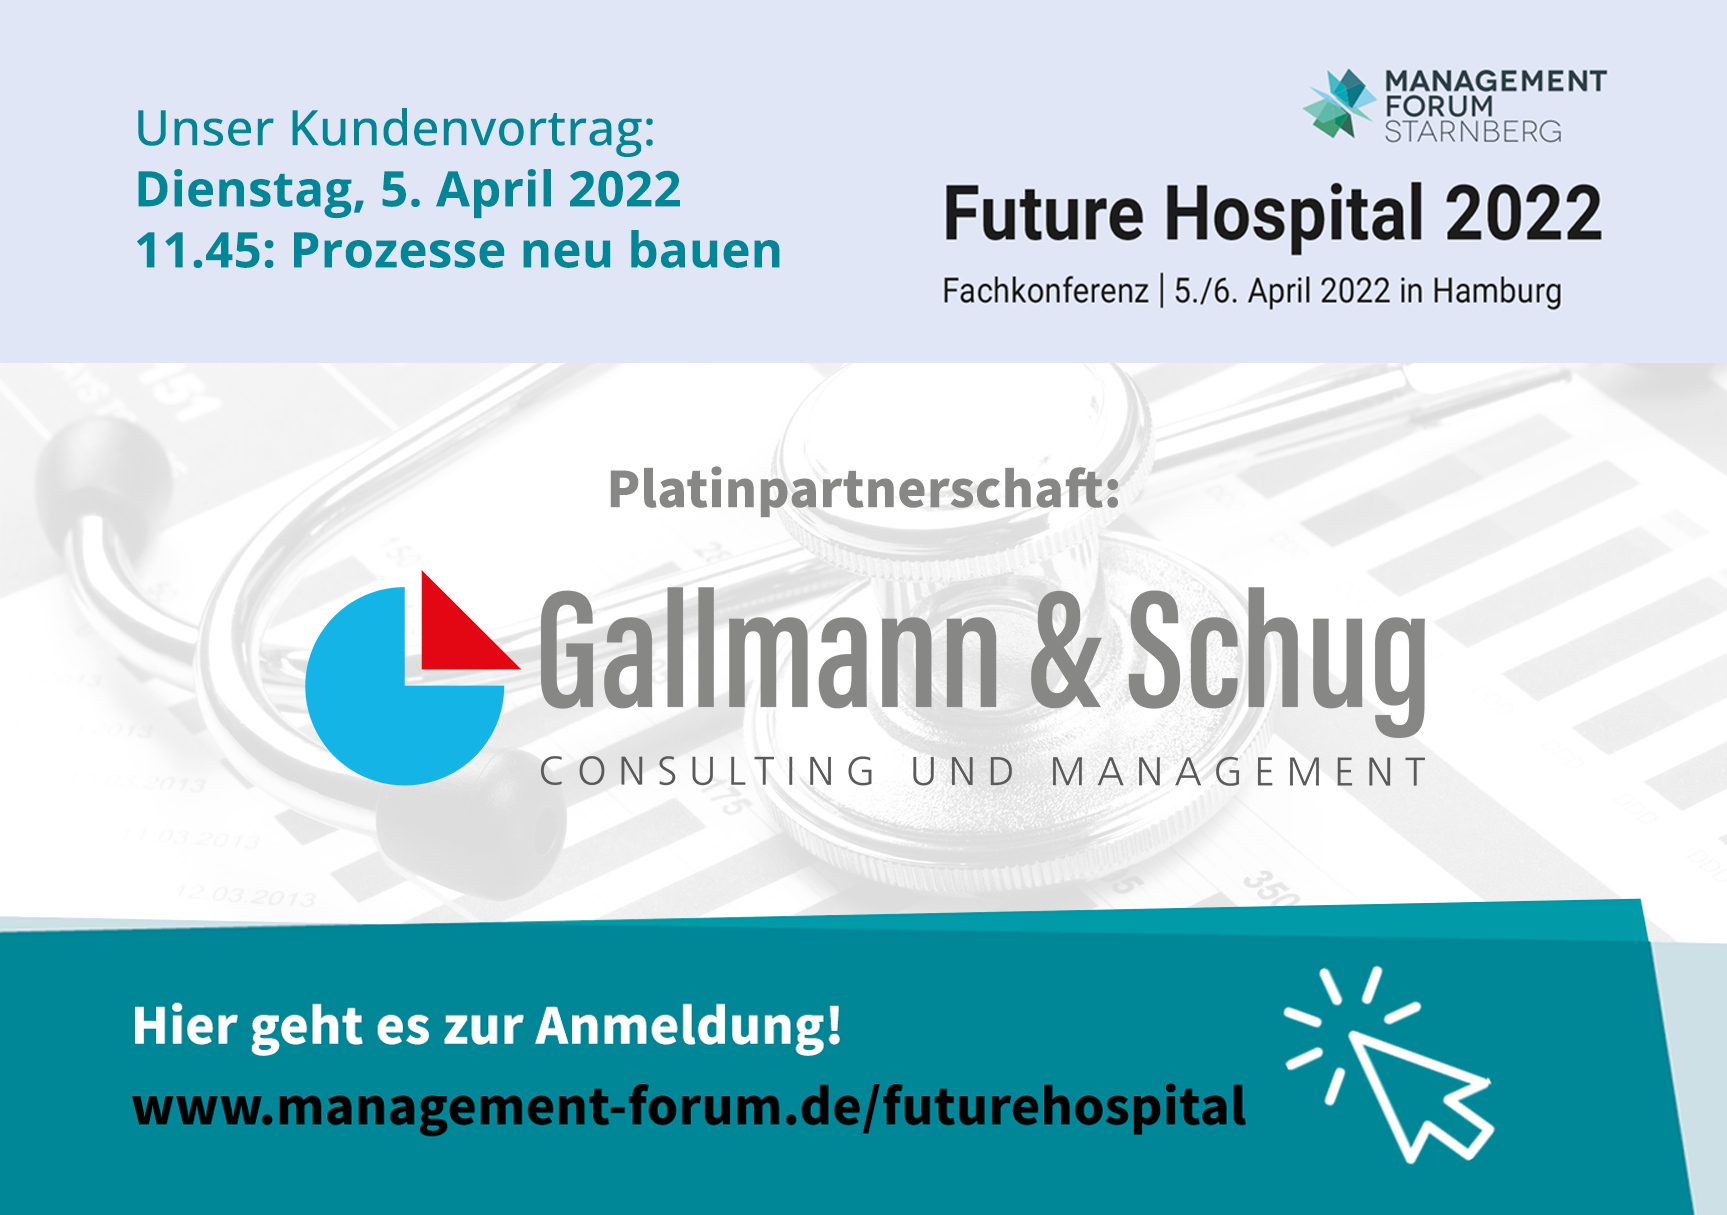 Future Hospital 2022 in Hamburg